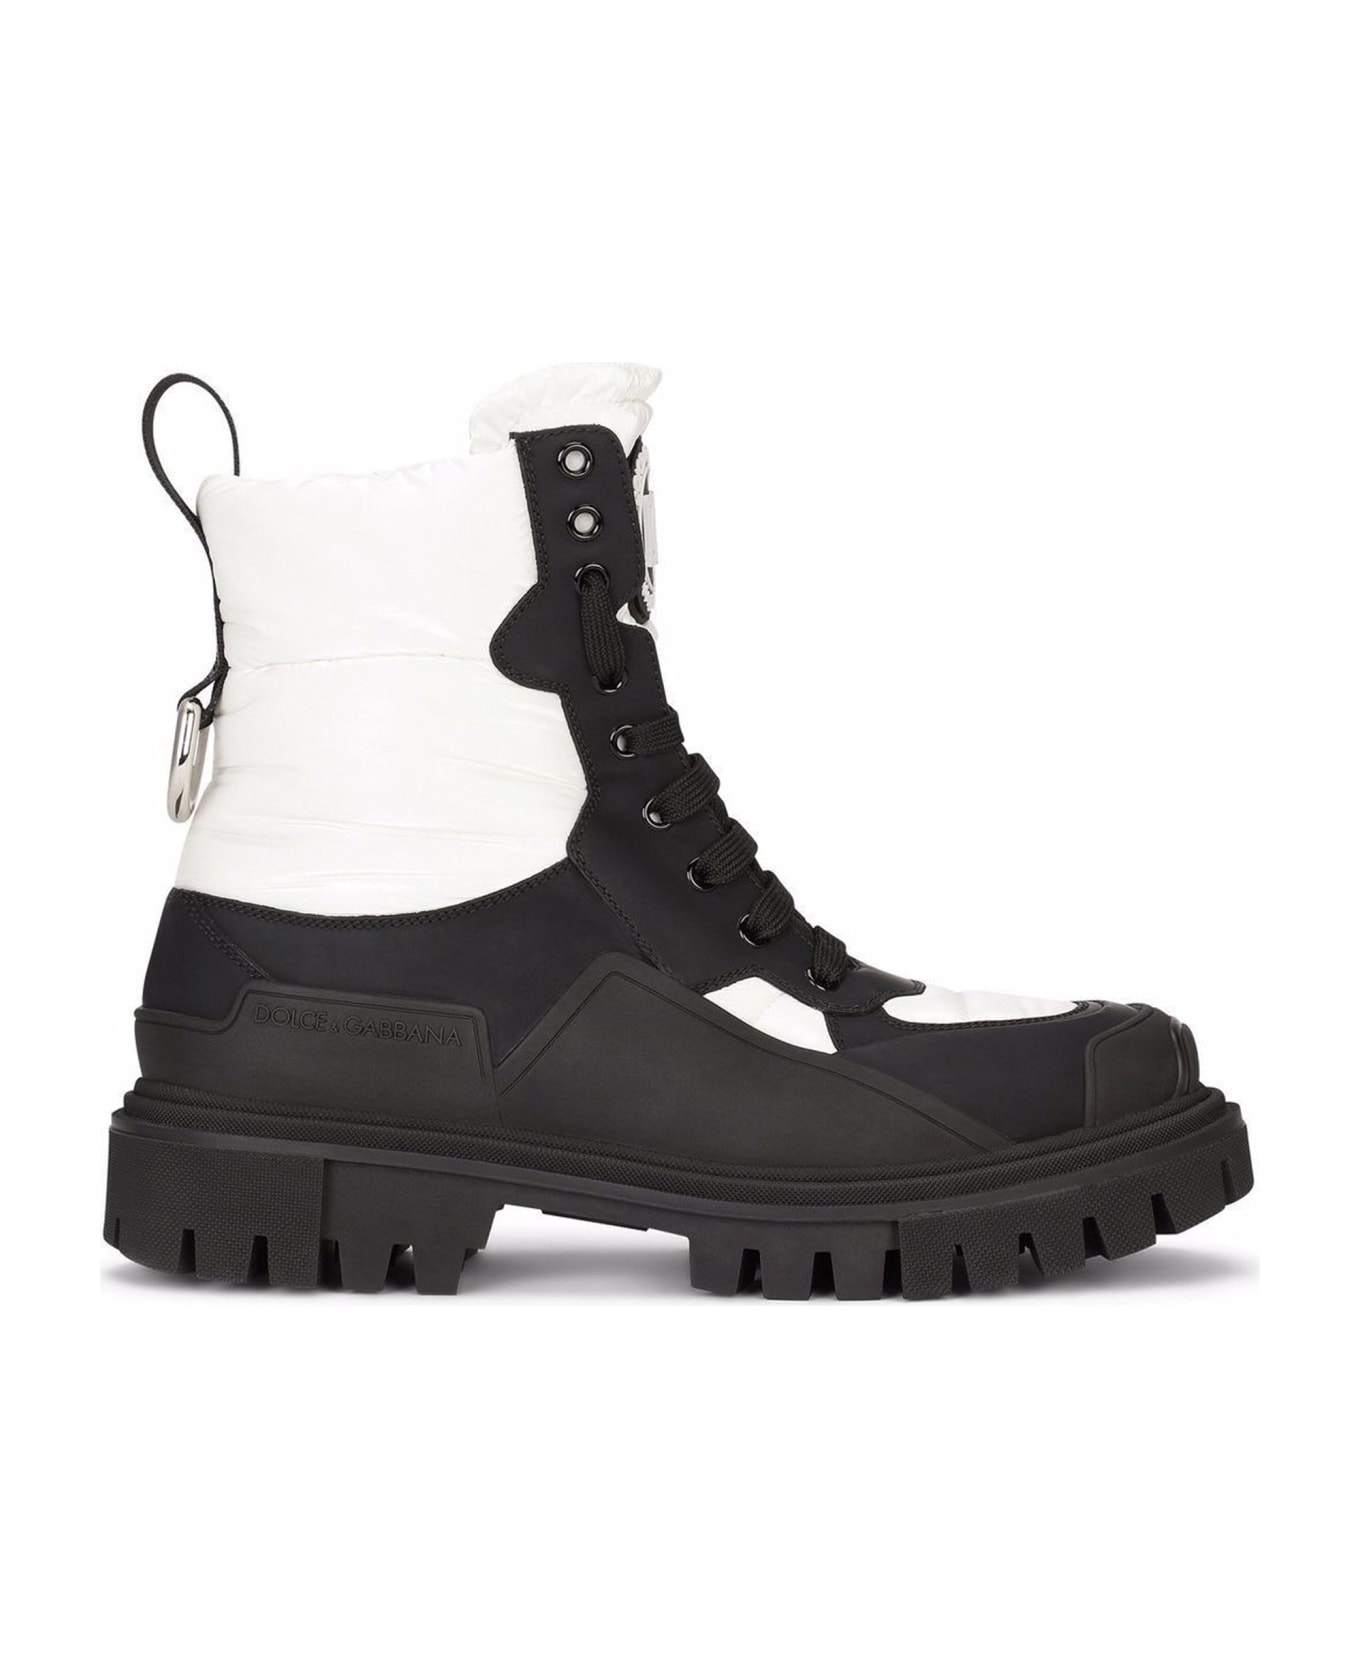 Dolce & Gabbana Hi-trekking Boots - Black